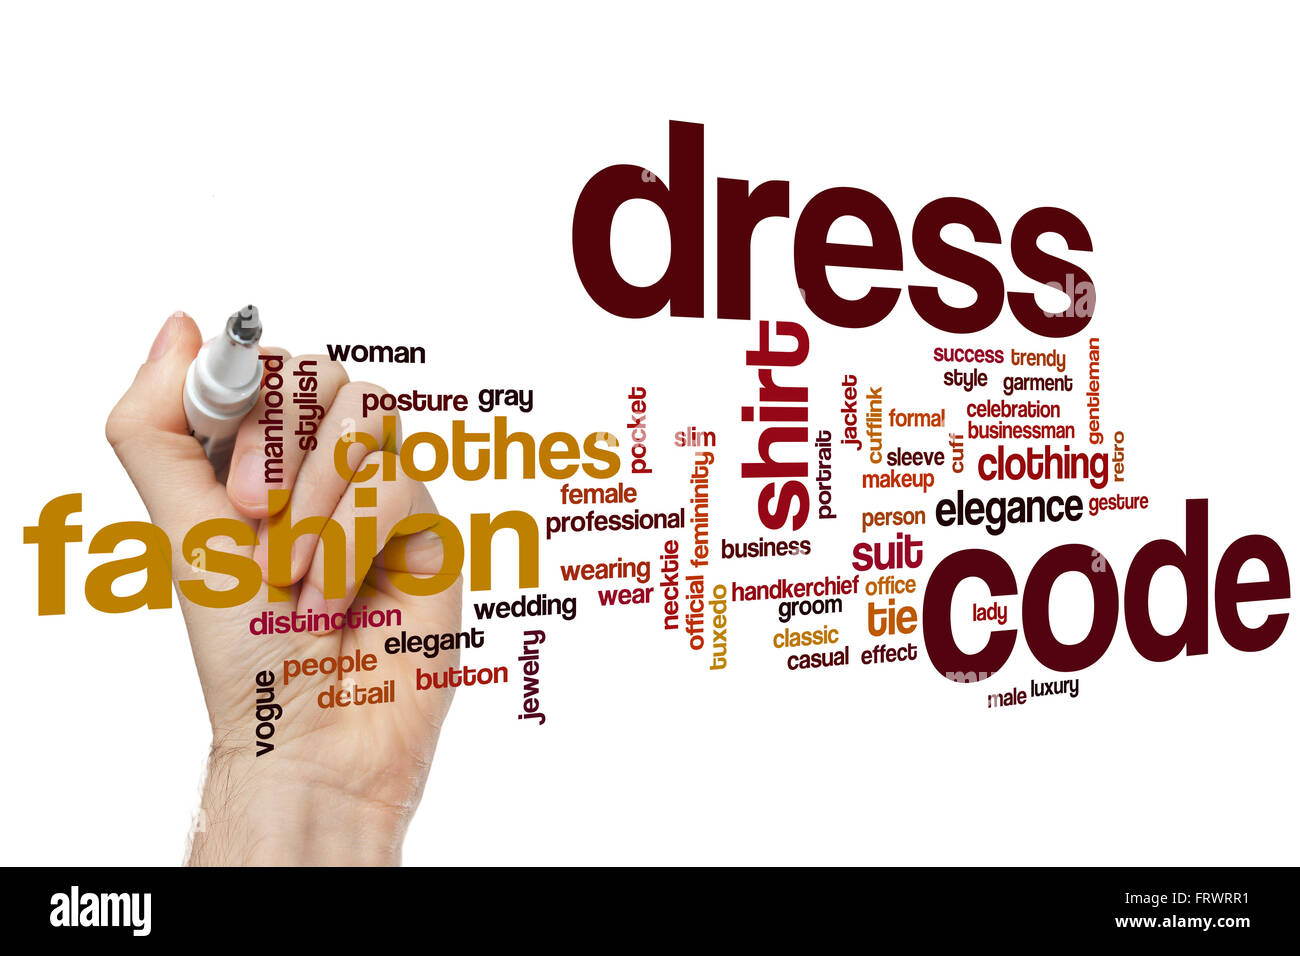 Dress code word cloud concept Stock Photo